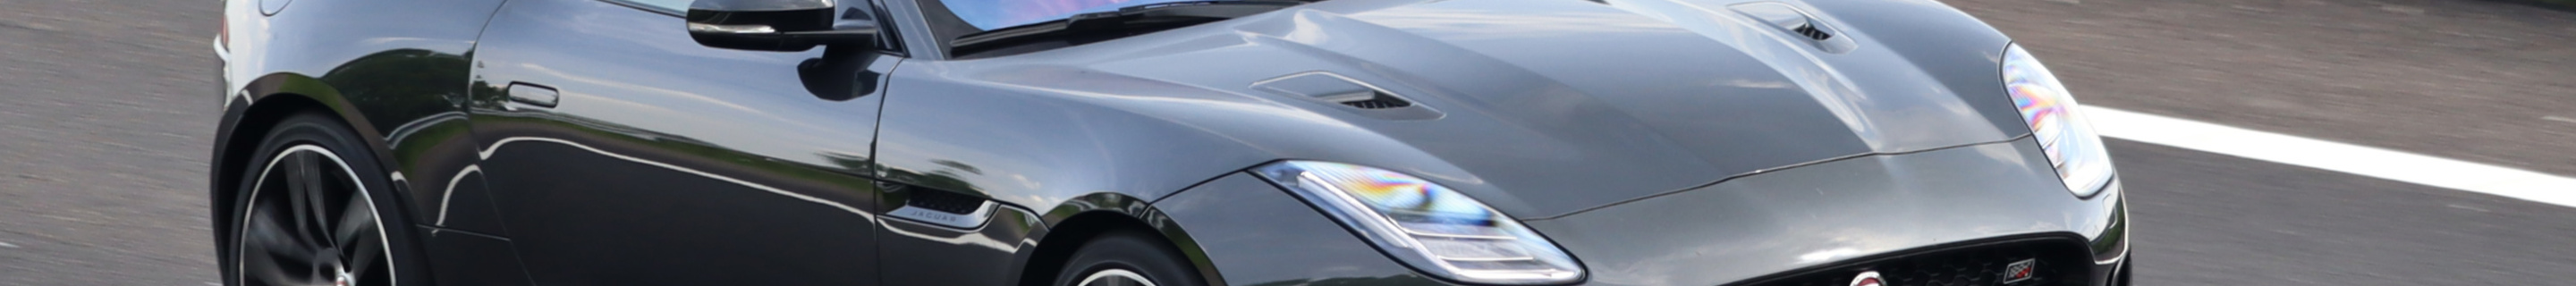 Jaguar F-TYPE S Coupé Chequered Flag Edition 2019